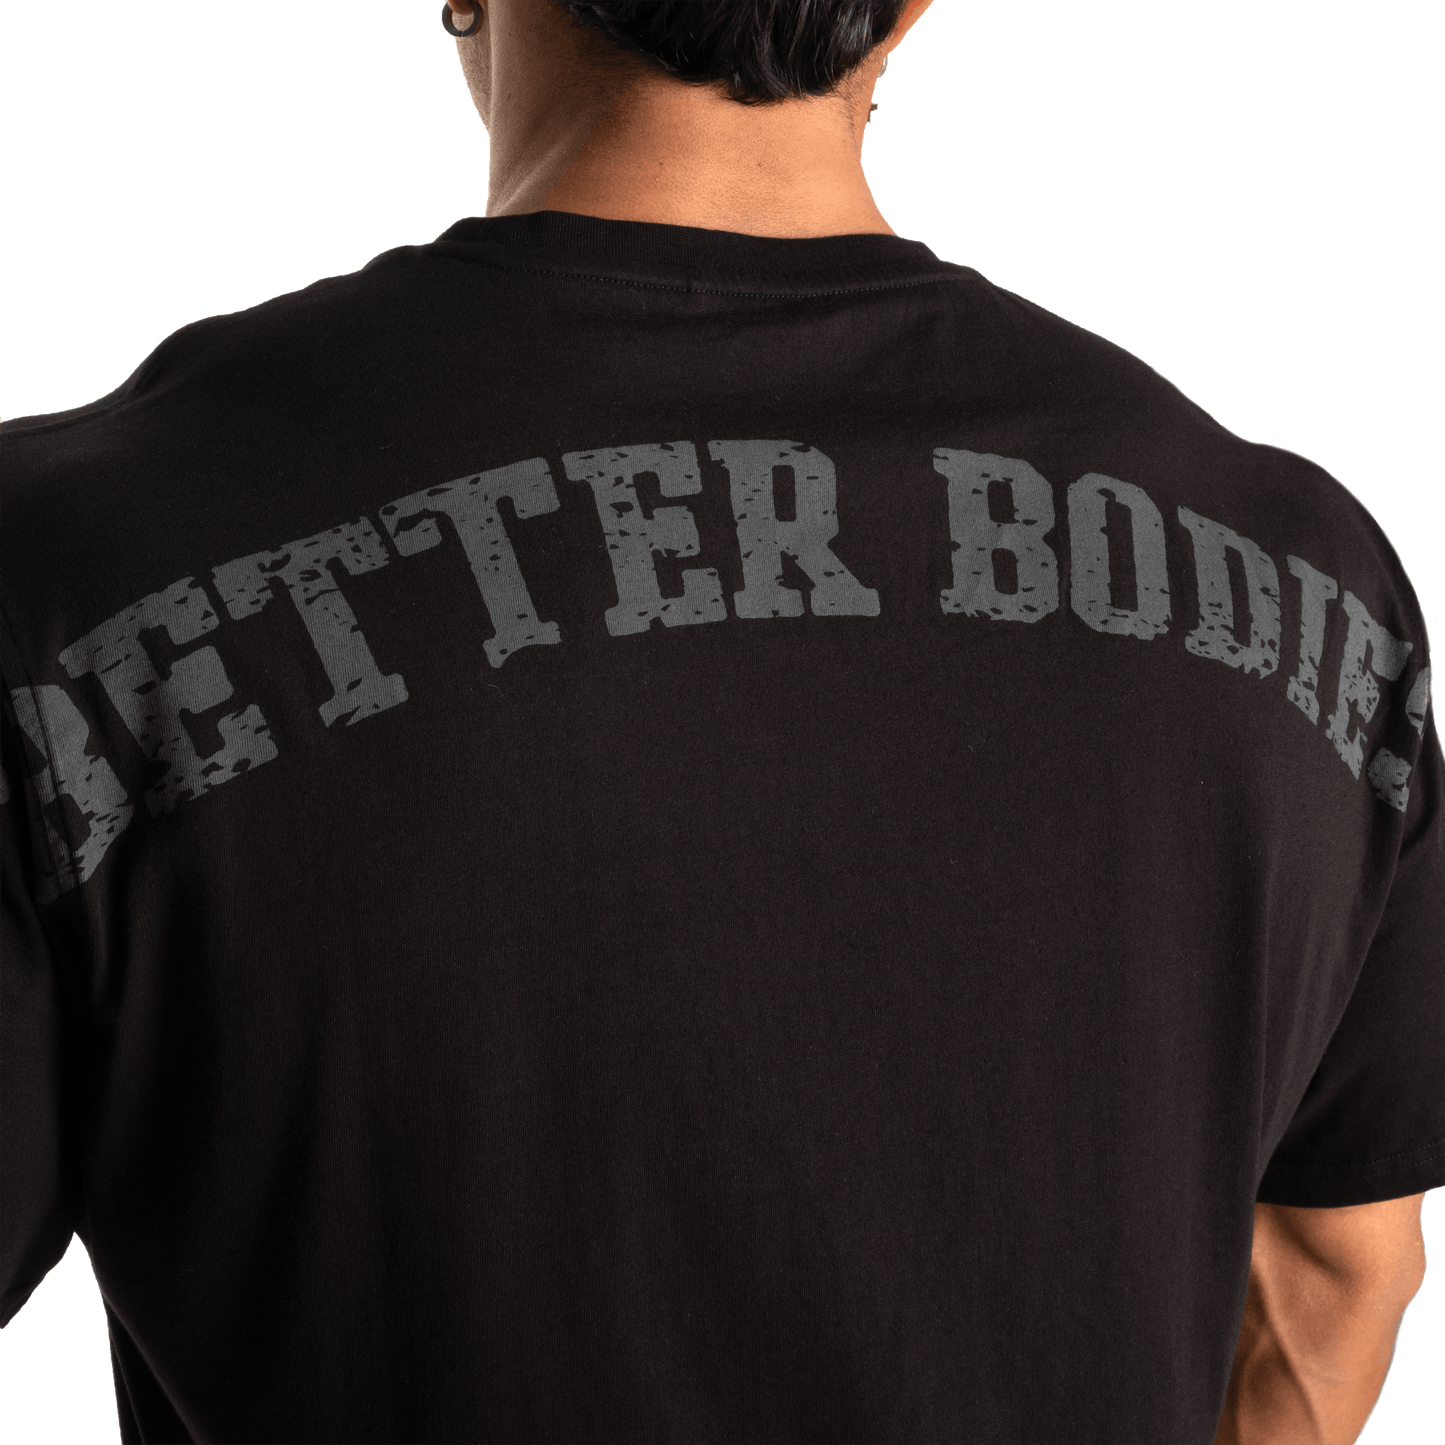 Better Bodies Union Original Tee Black